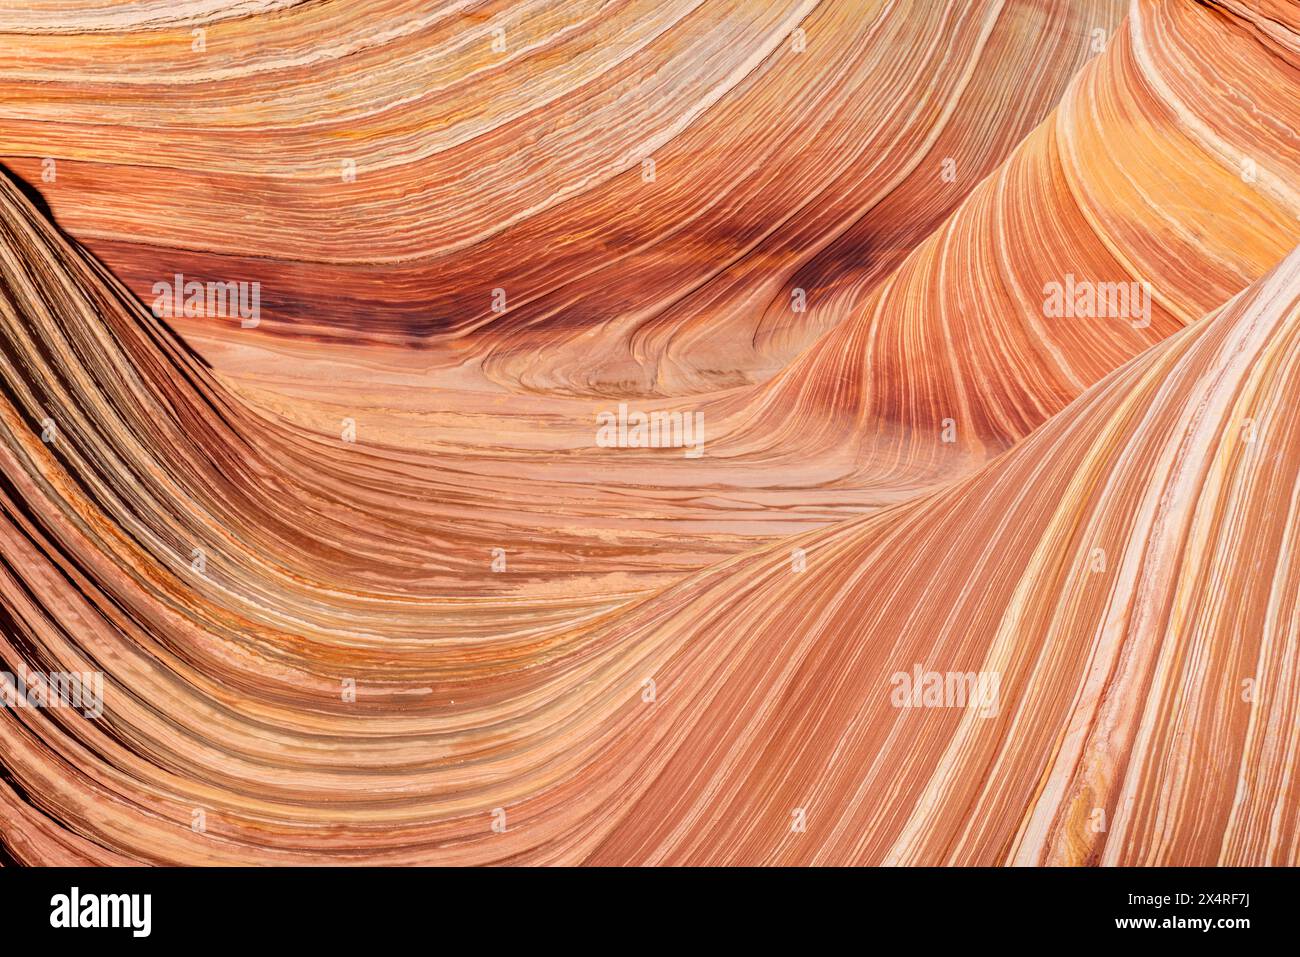 Die Felsformation Wave, Coyote Buttes North am Paria Canyon, Vermilion Cliffs National Monument, Arizona, USA Stockfoto